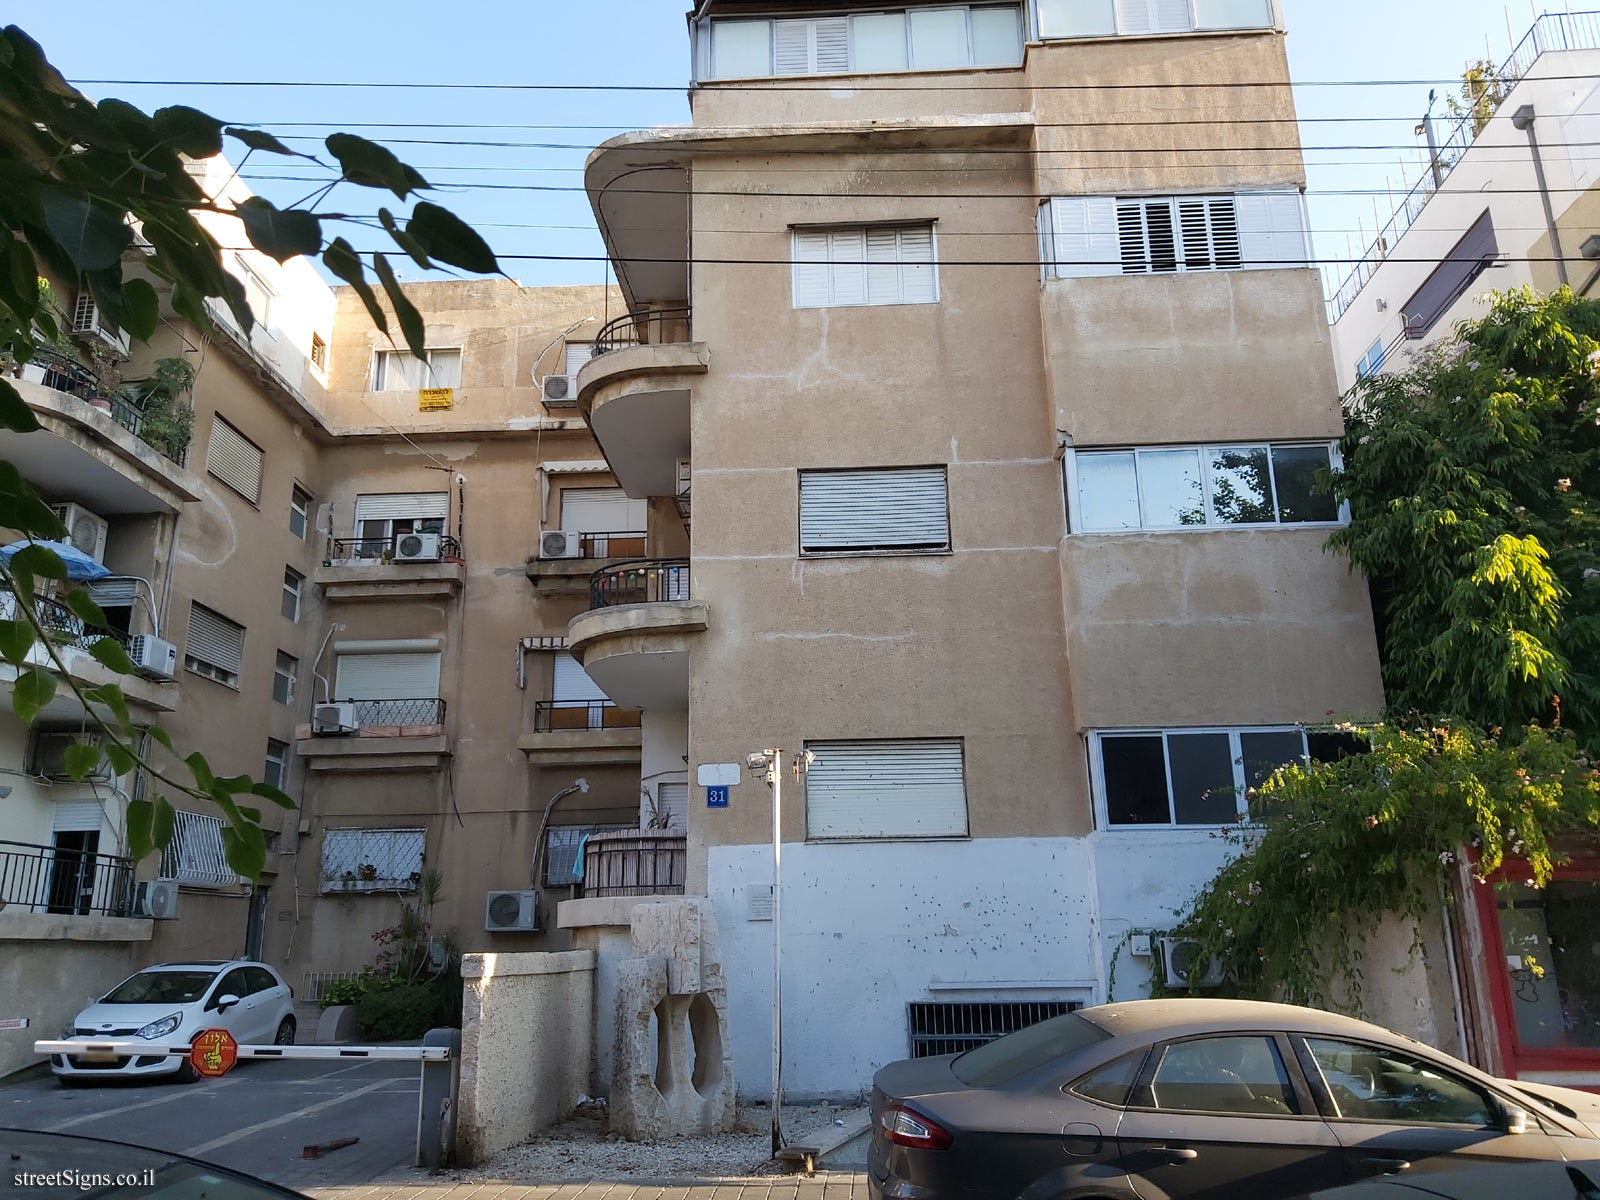 The house of Yaakov Einstein- J. L. Gordon St 31, Tel Aviv-Yafo, Israel